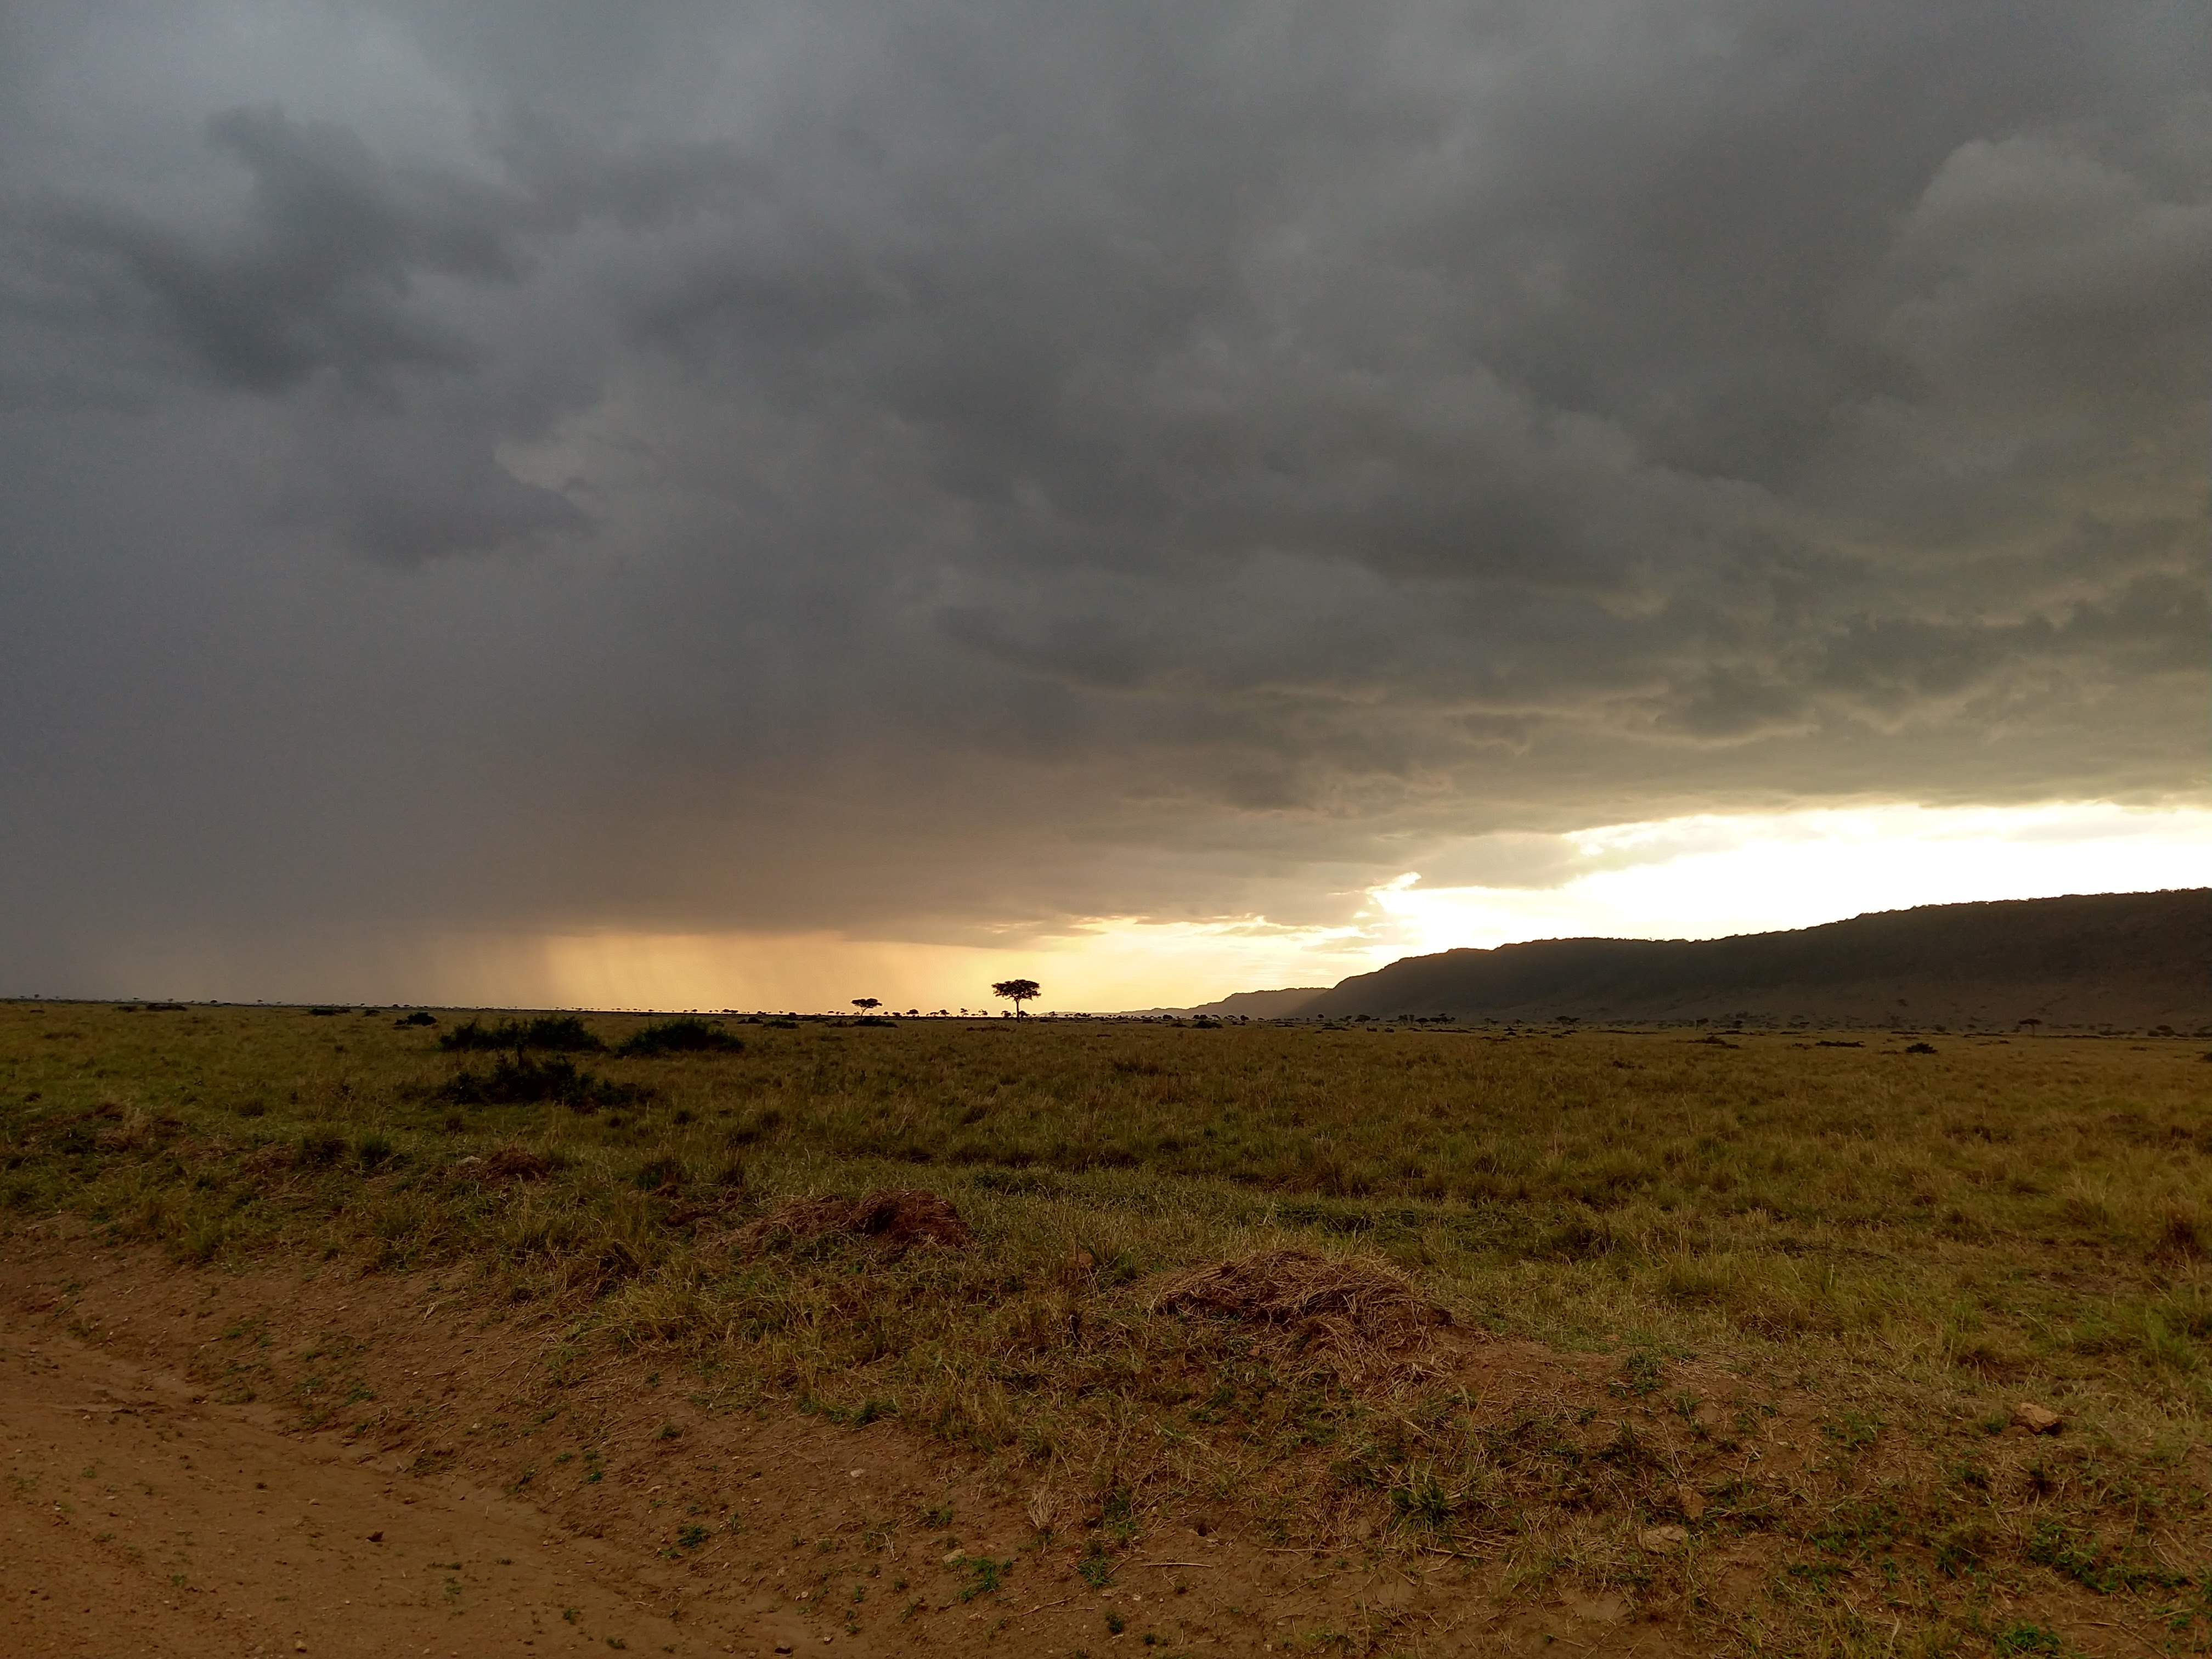 Rainfall over the grasslands of Kenya